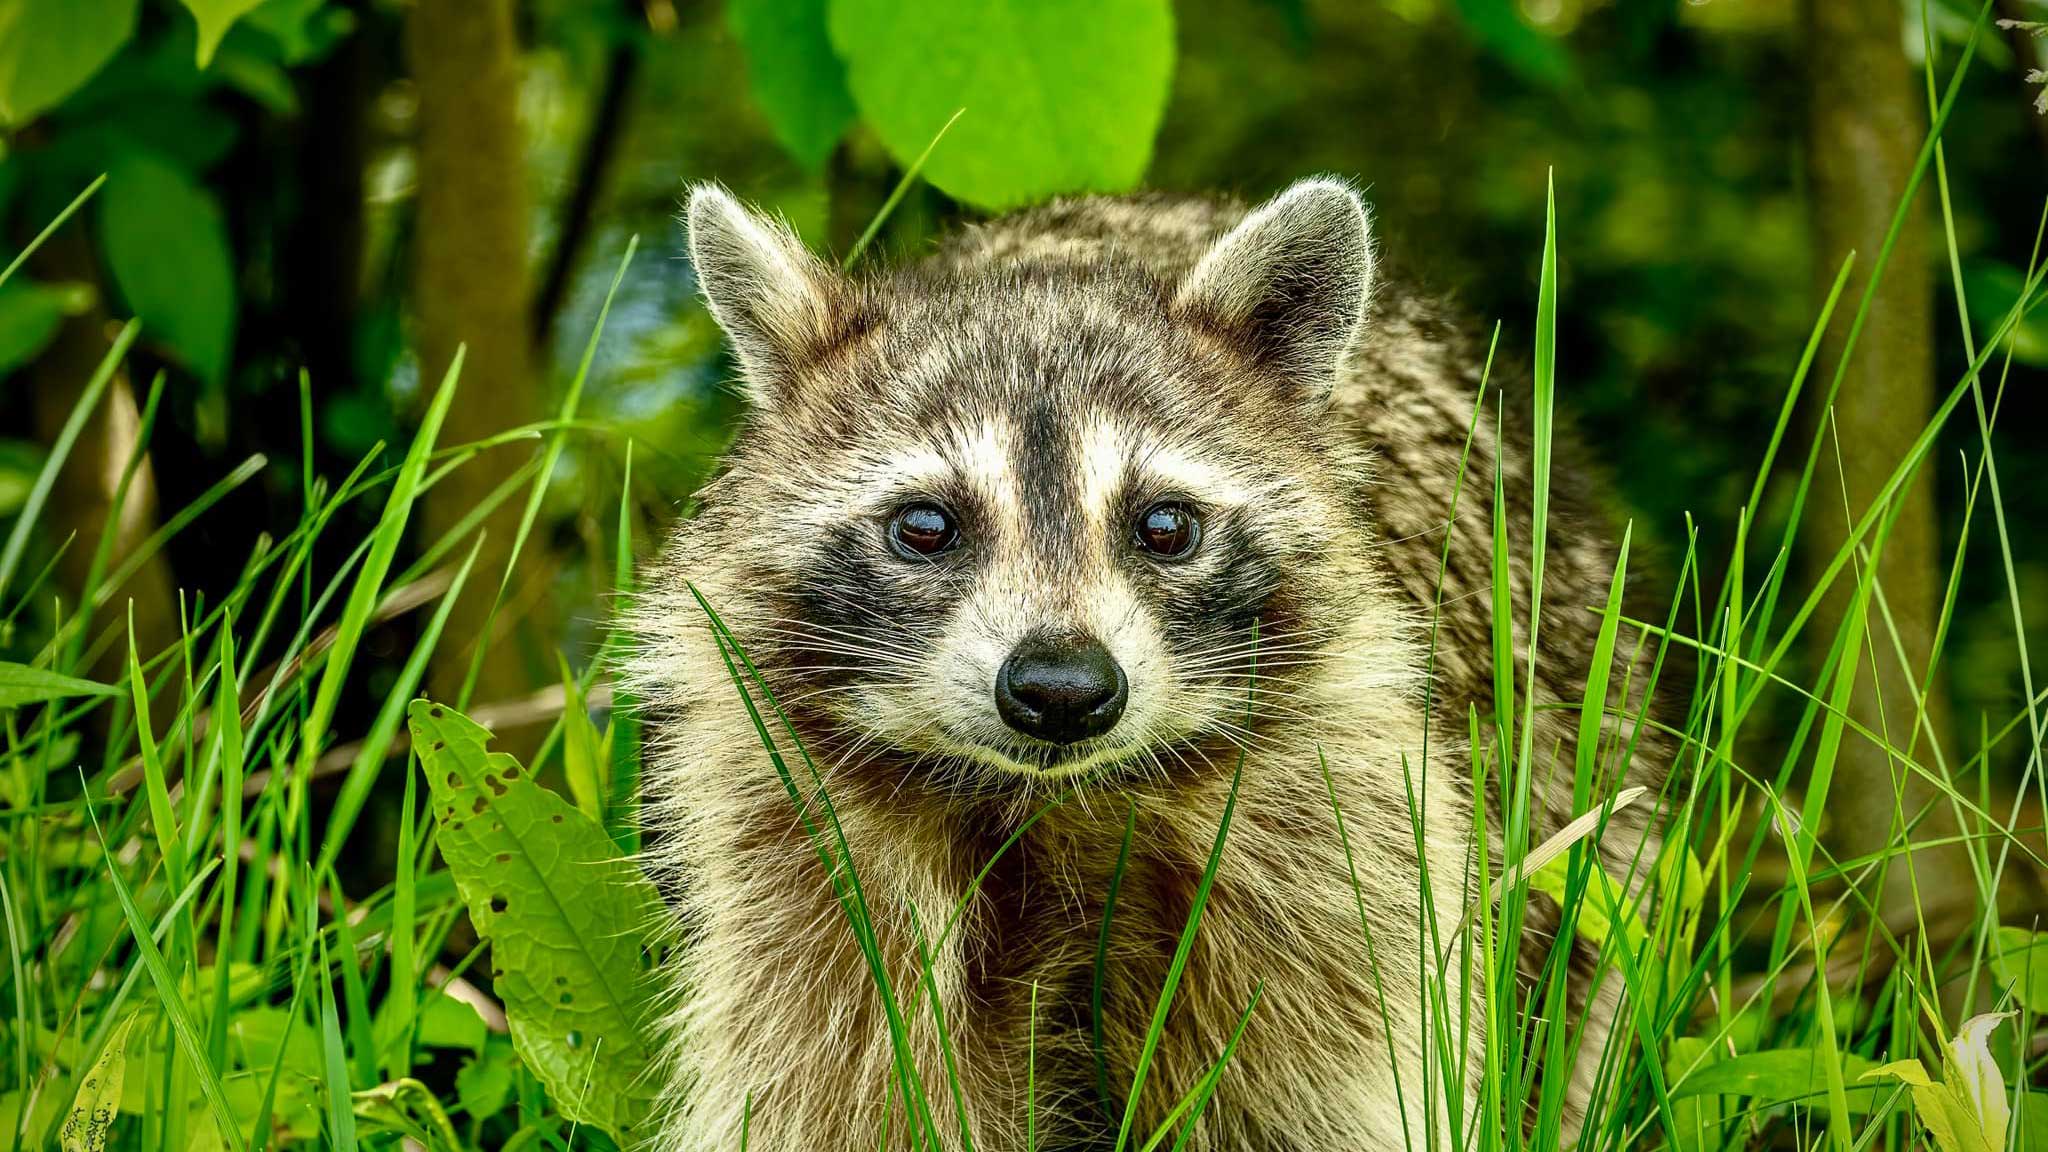 A raccoon looking at the camera.